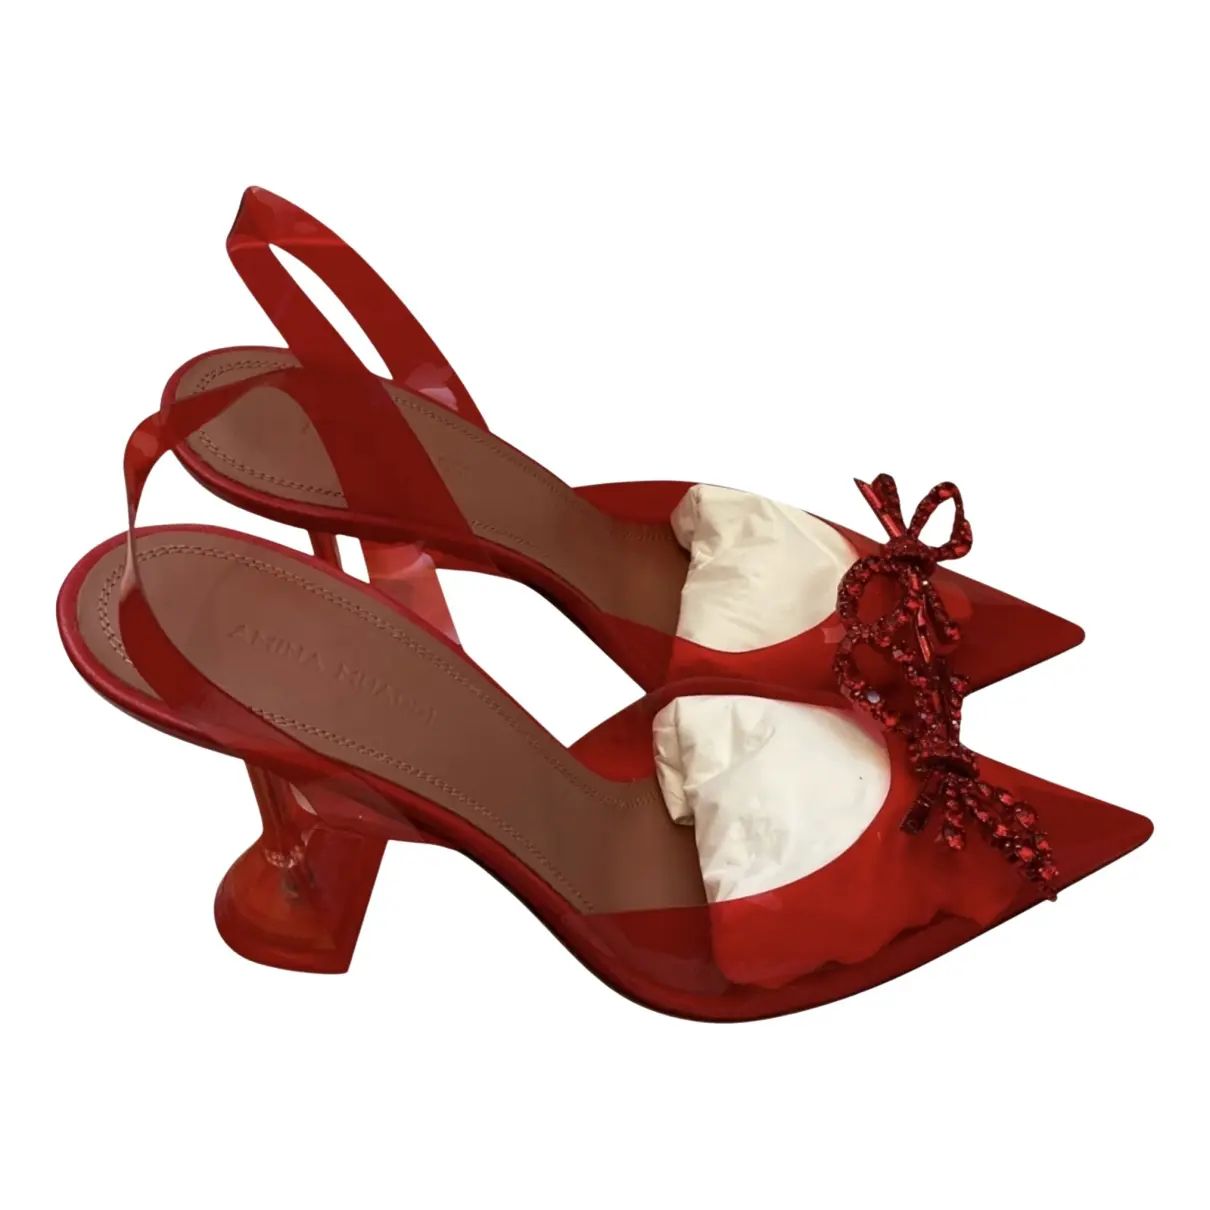 AMINA MUADDIRosie heels39EUNever wornRed, Plastic$2,196.29$1,211.75Use code COLLECTIVE15 for 15% ... | Vestiaire Collective (Global)